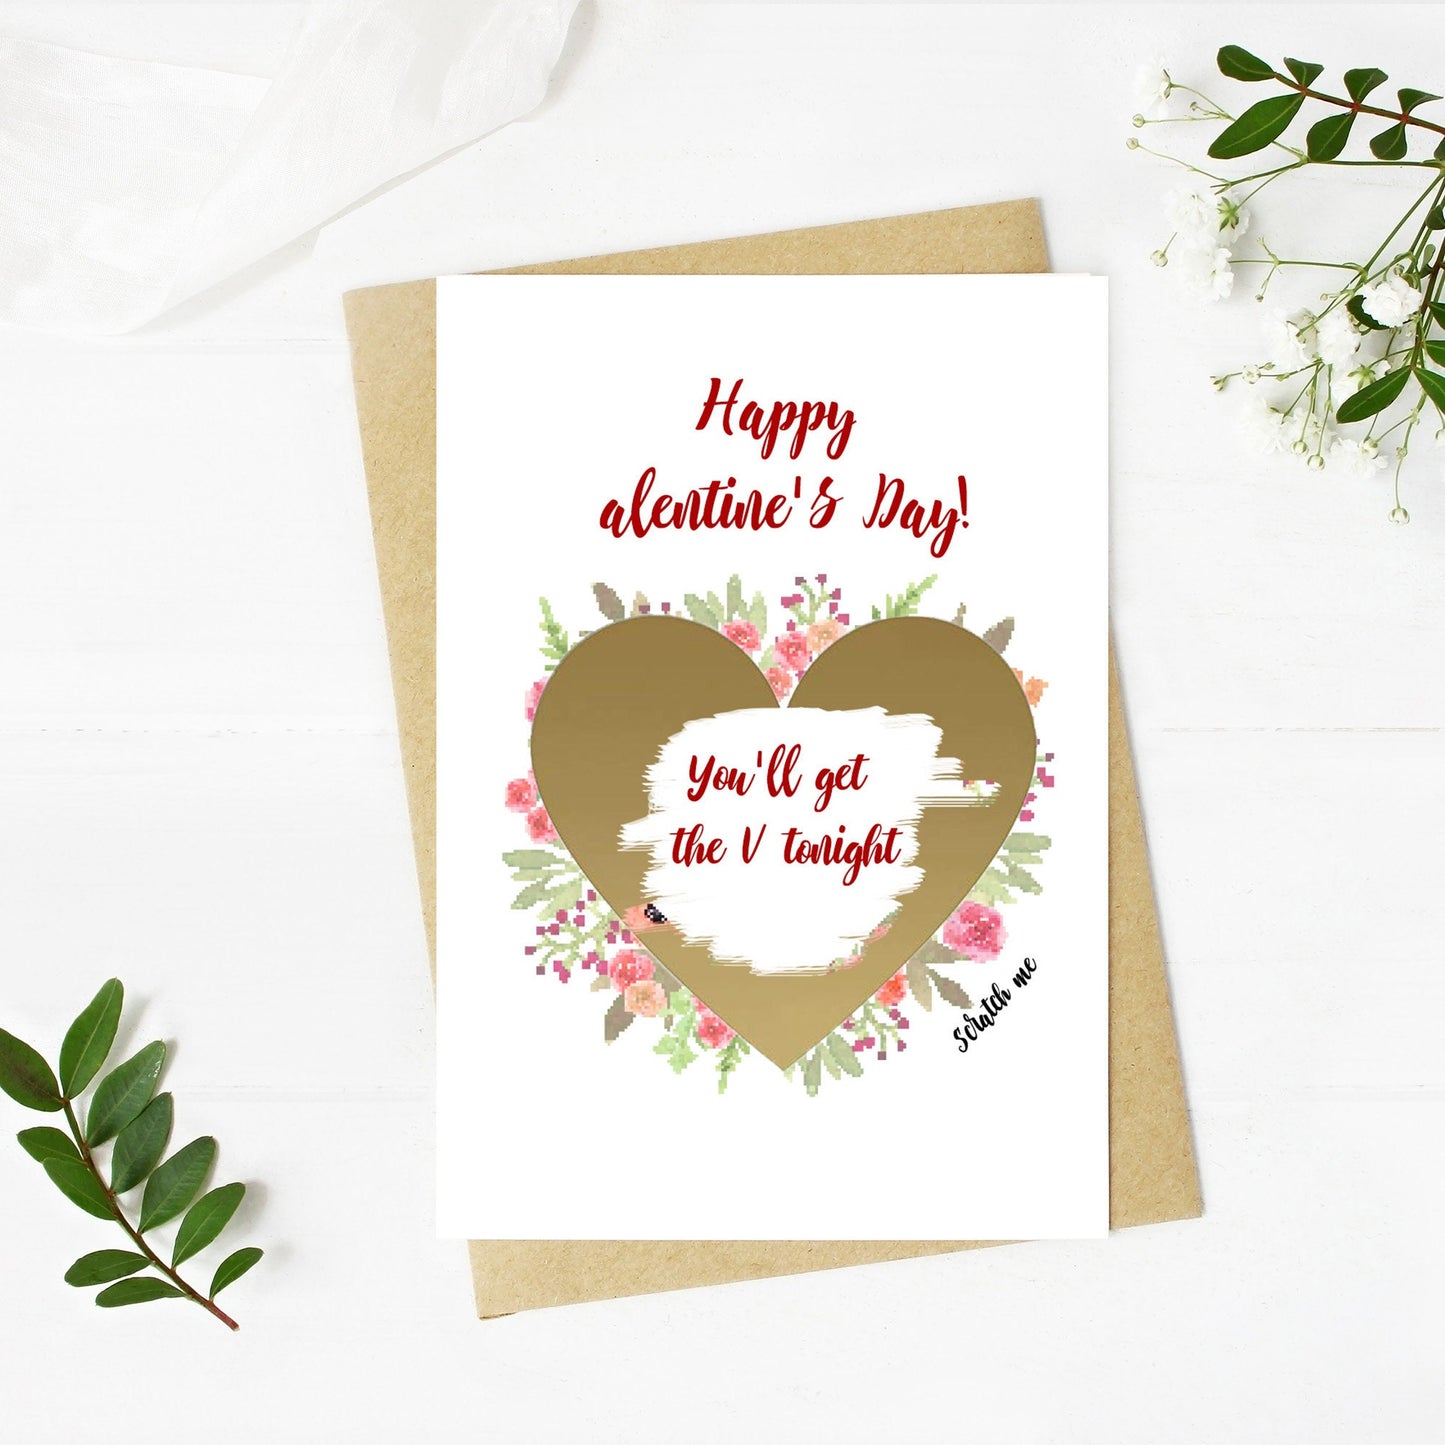 Valentine's Day Card - Happy _alentine's day!